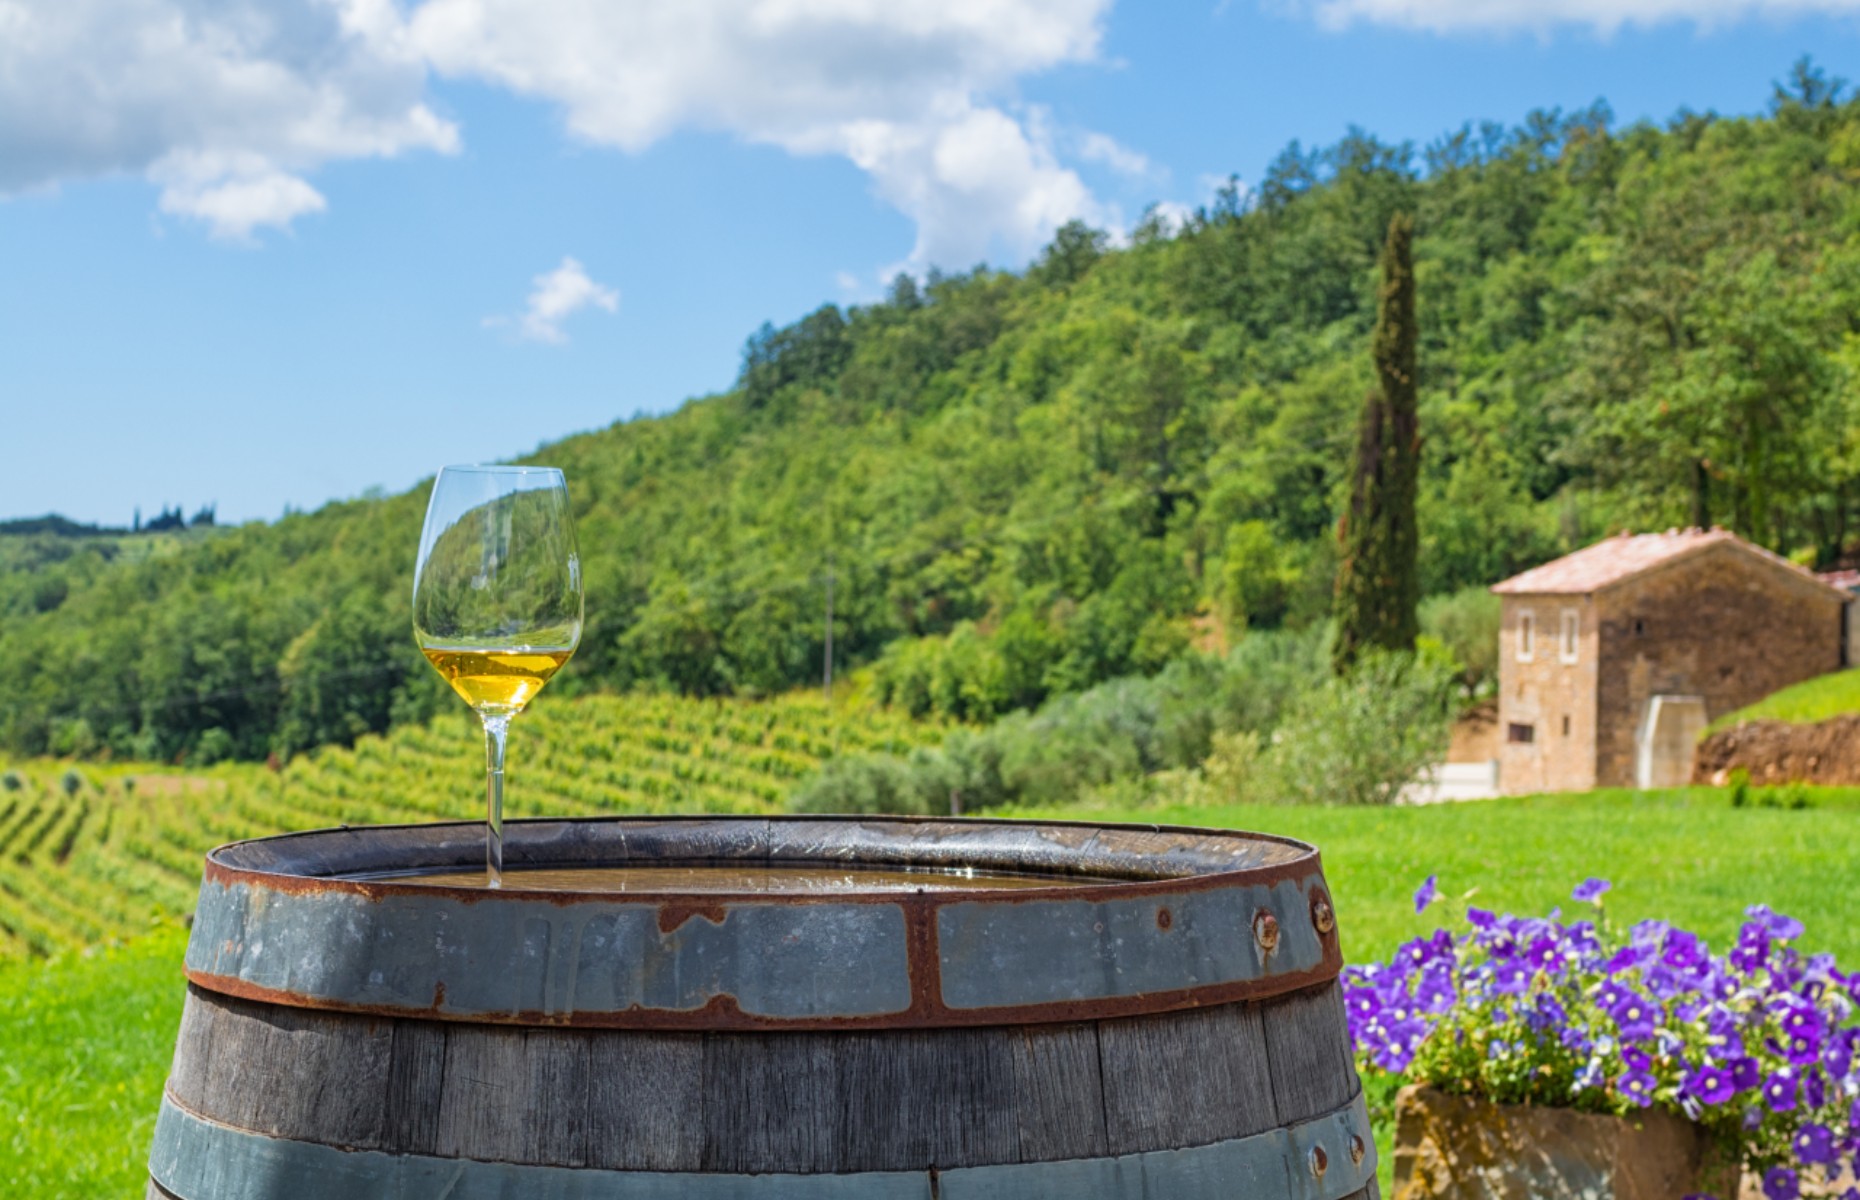 A Croatian vineyard (Image: Phant/Shutterstock)